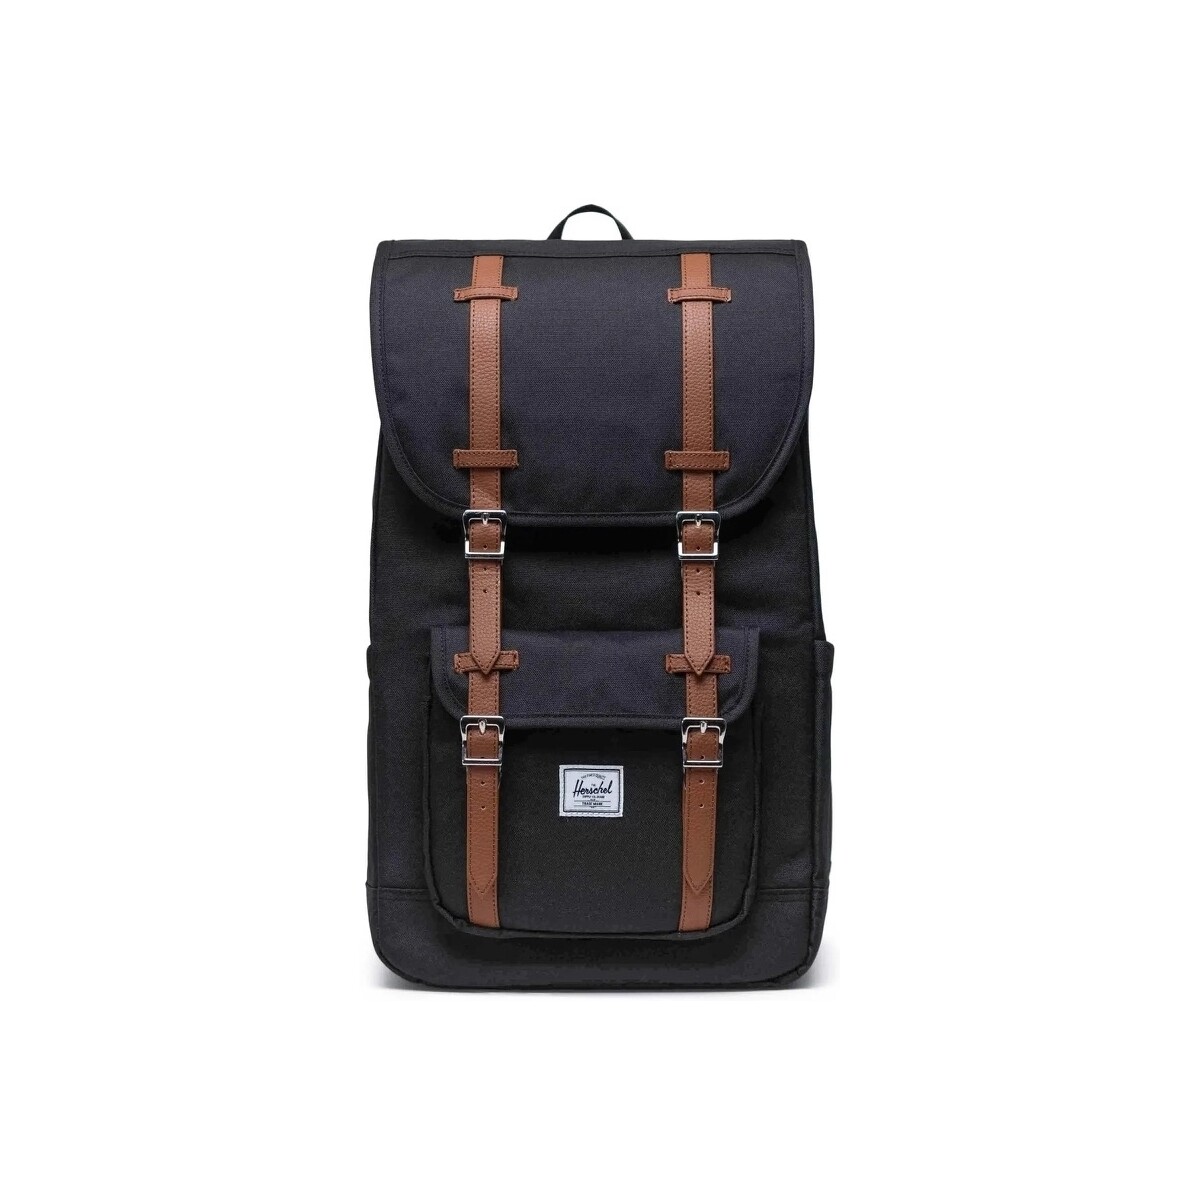 Sacs Homme Moschino Lettering Leather Shoulder Bag Little America classic Backpack - Black Noir